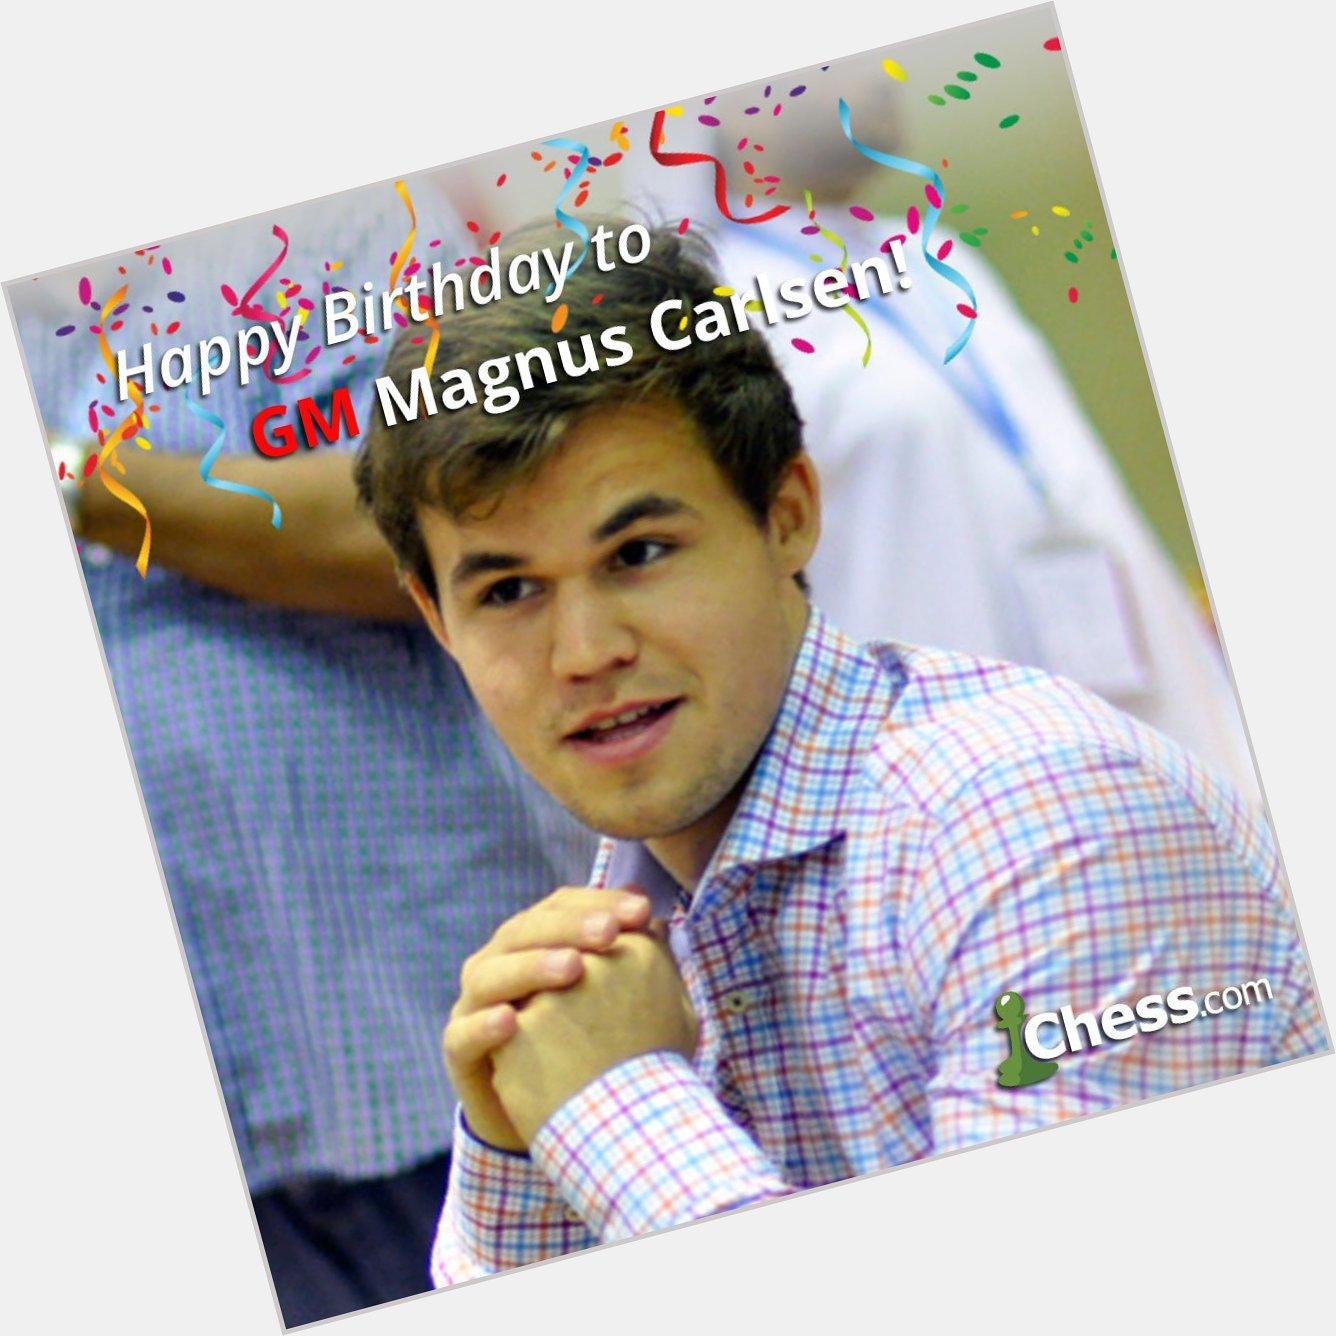 Magnus Carlsen turns 25 today! Wish a happy birthday. 